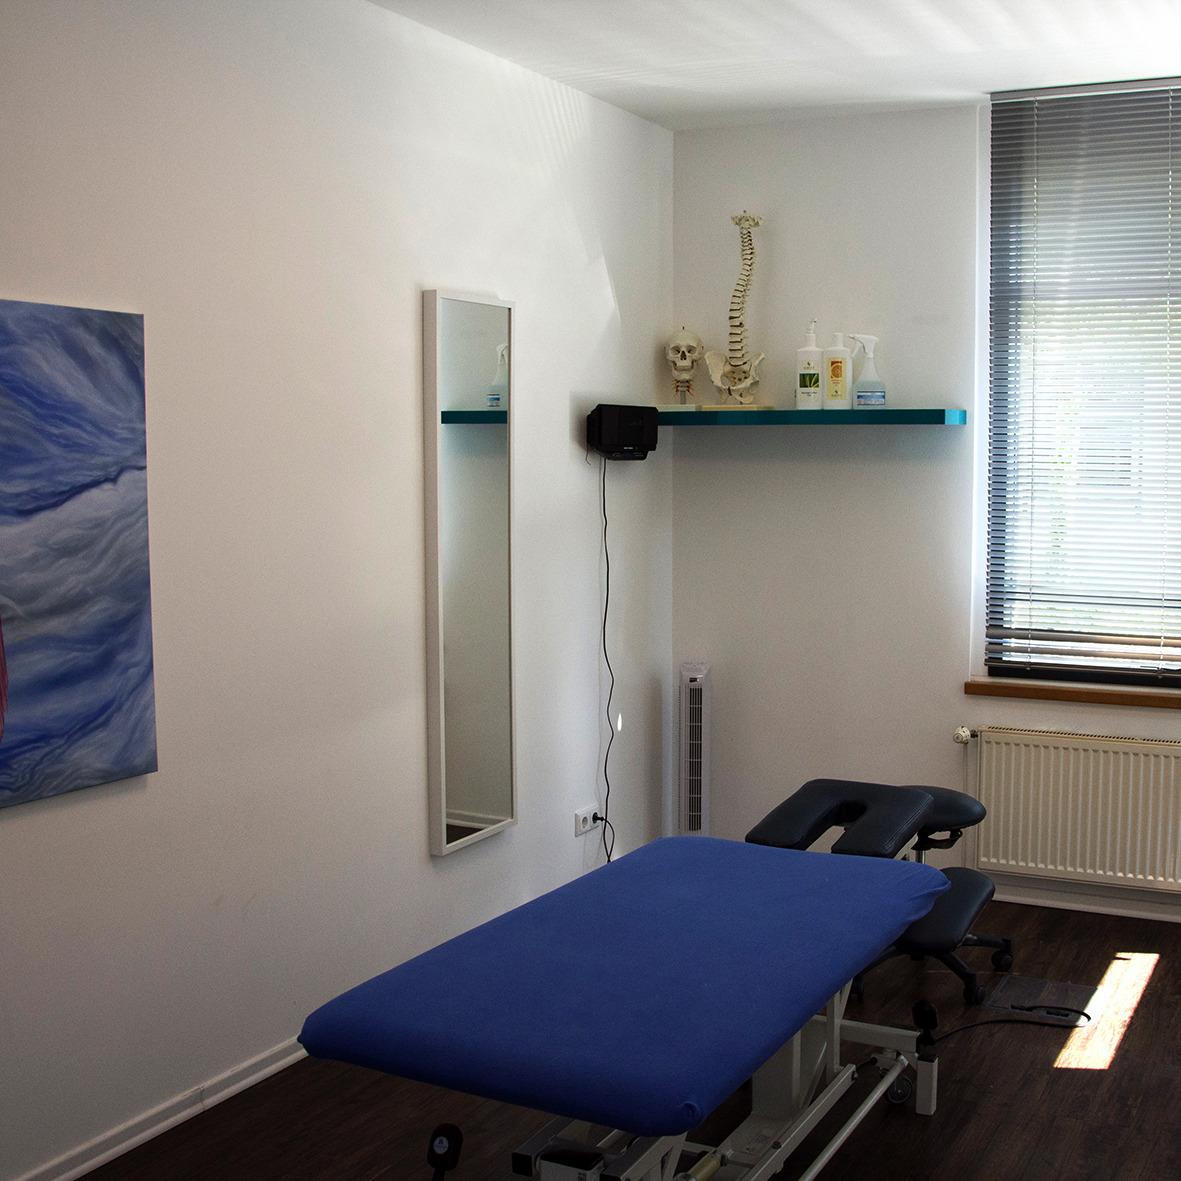 Physiotherapiezentrum Pataletis GmbH, Calenberger Esplanade 2 in Hannover